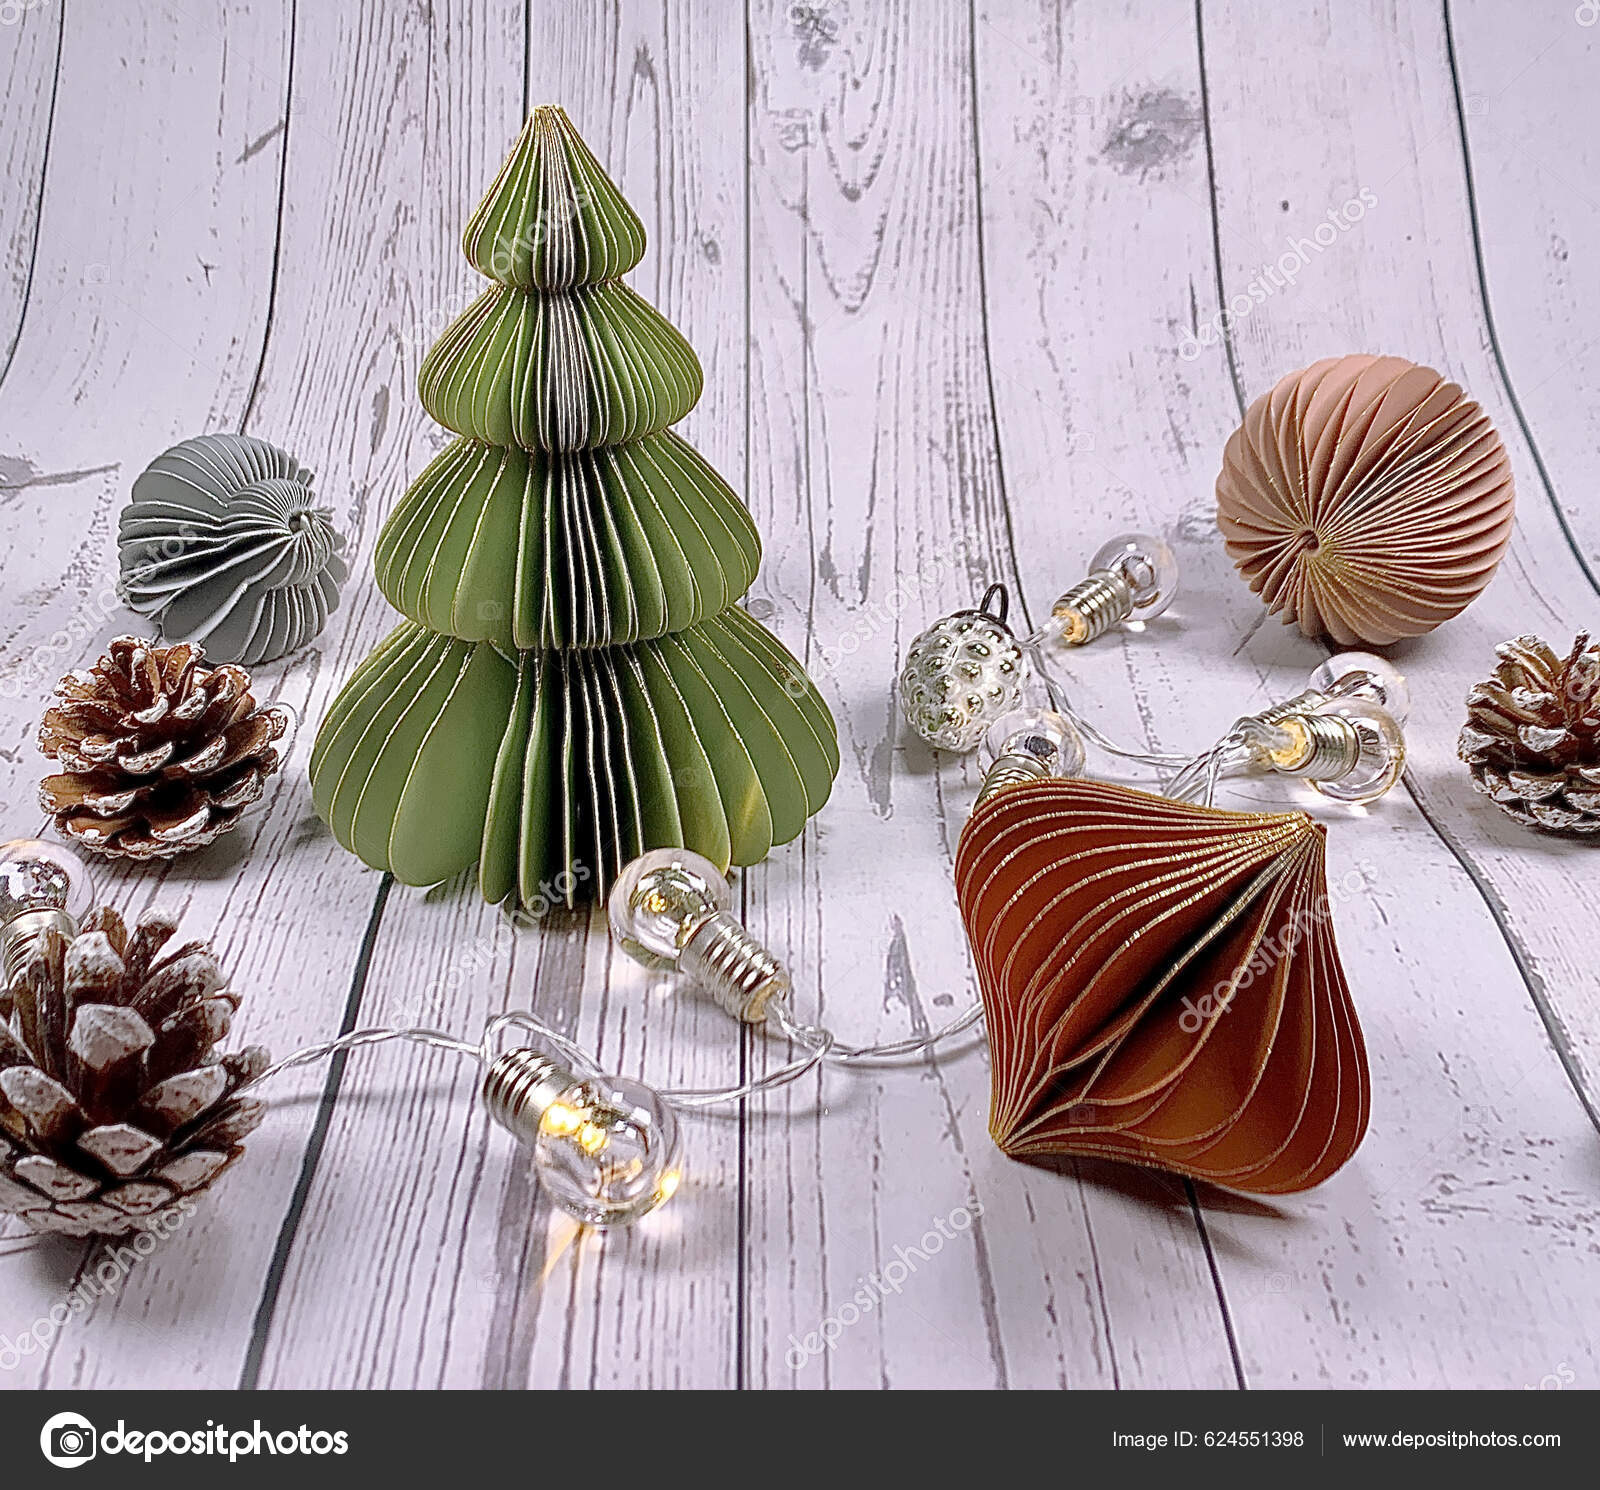 https://st5.depositphotos.com/3051229/62455/i/1600/depositphotos_624551398-stock-photo-flat-lay-christmas-tree-decorations.jpg